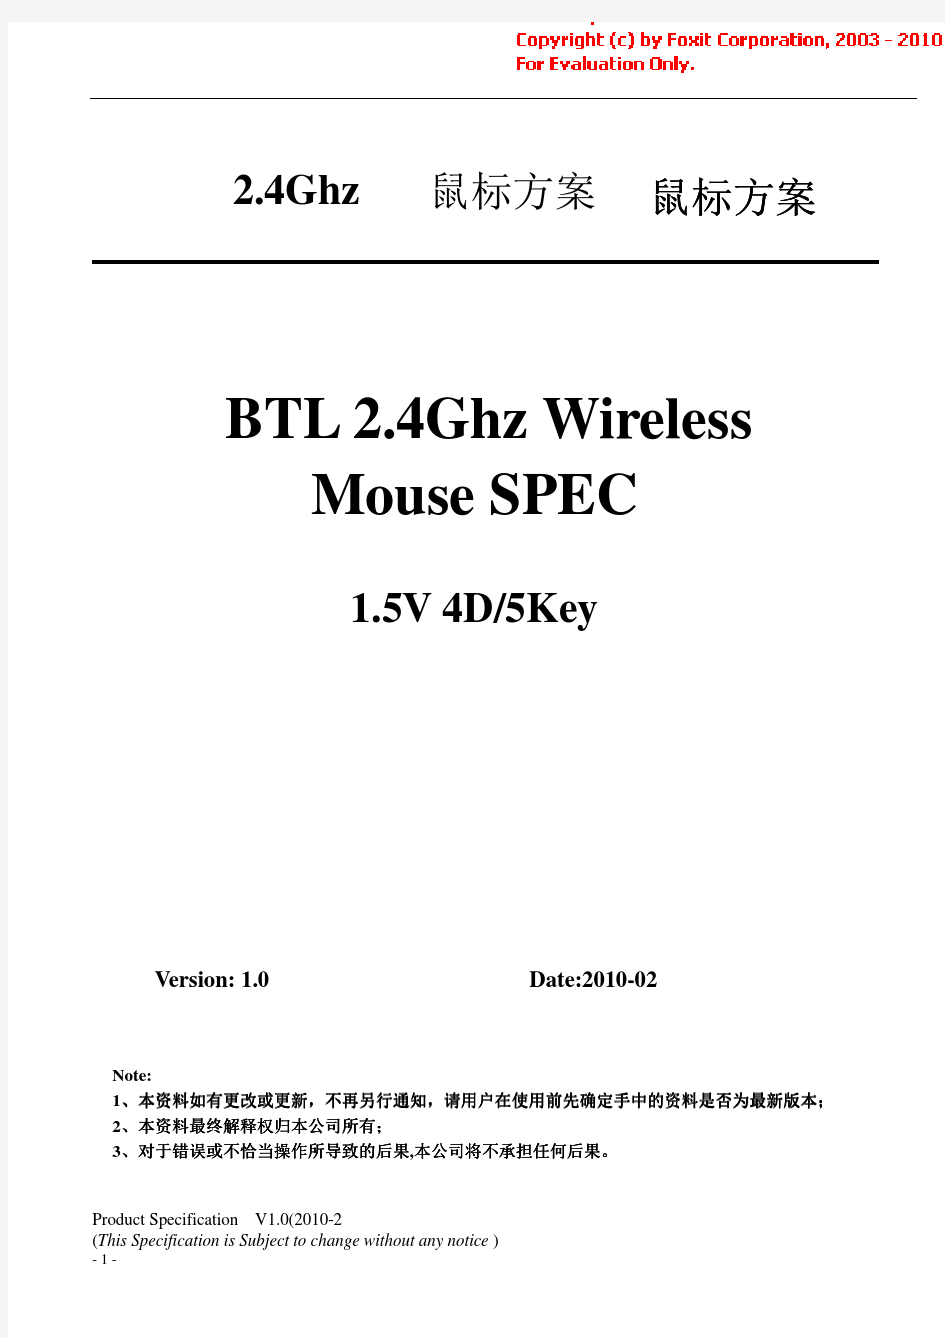 2.4Ghz Wireless Mouse SPEC